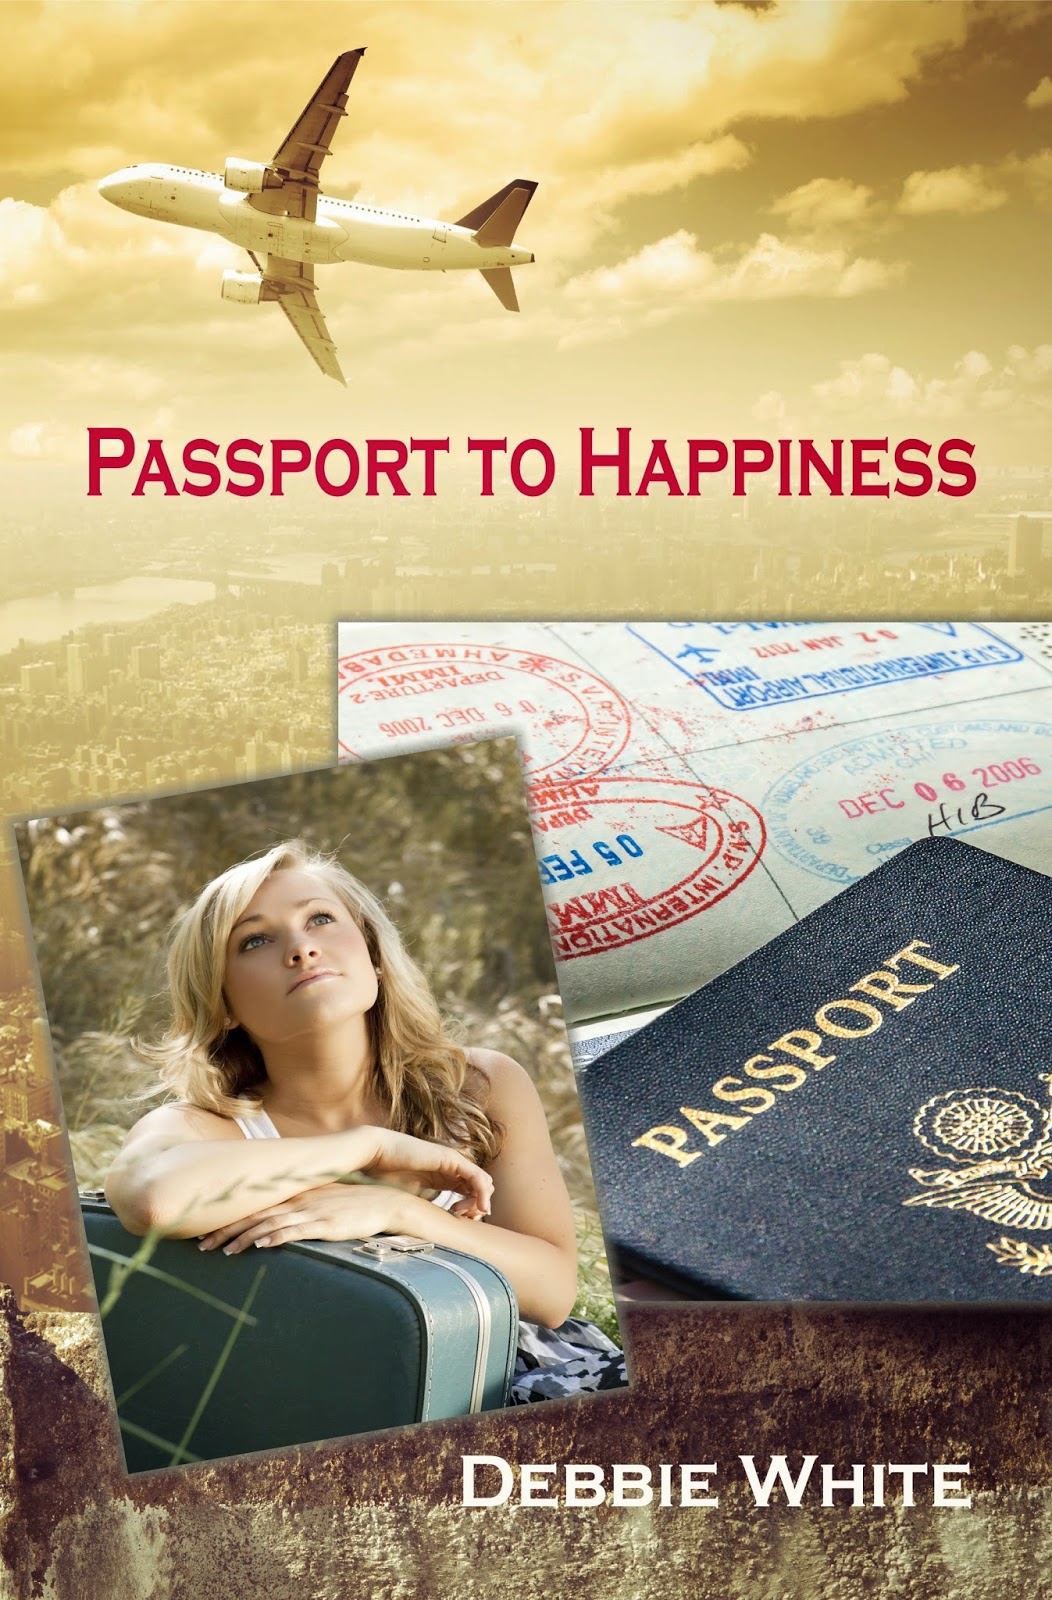 http://www.amazon.com/Passport-To-Happiness-Debbie-White/dp/1500579920/ref=tmm_pap_title_0?ie=UTF8&qid=1424411518&sr=1-2